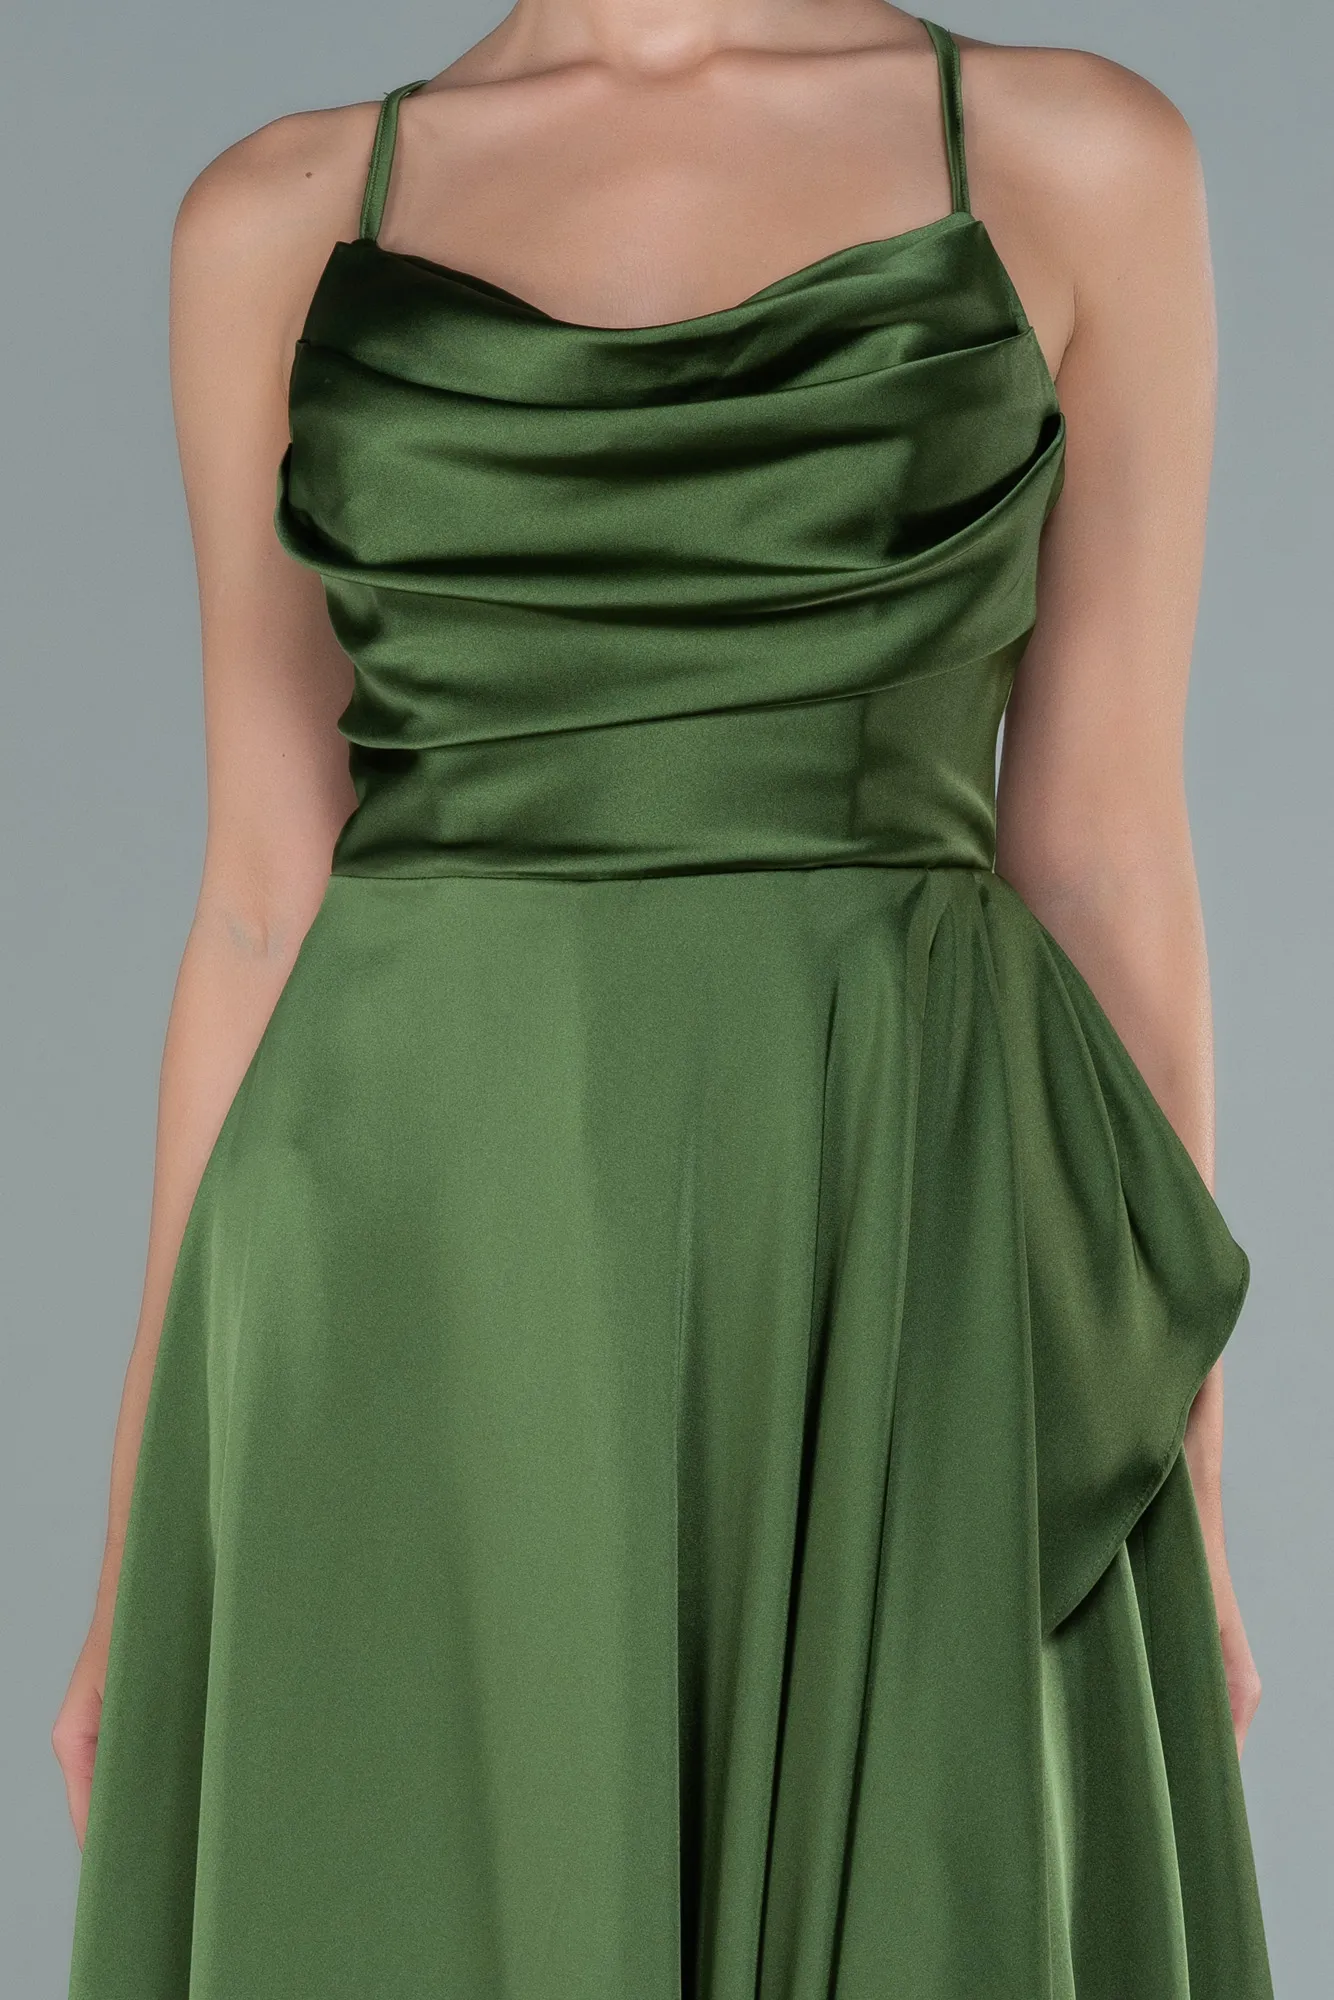 Olive Drab-Long Satin Evening Dress ABU1843